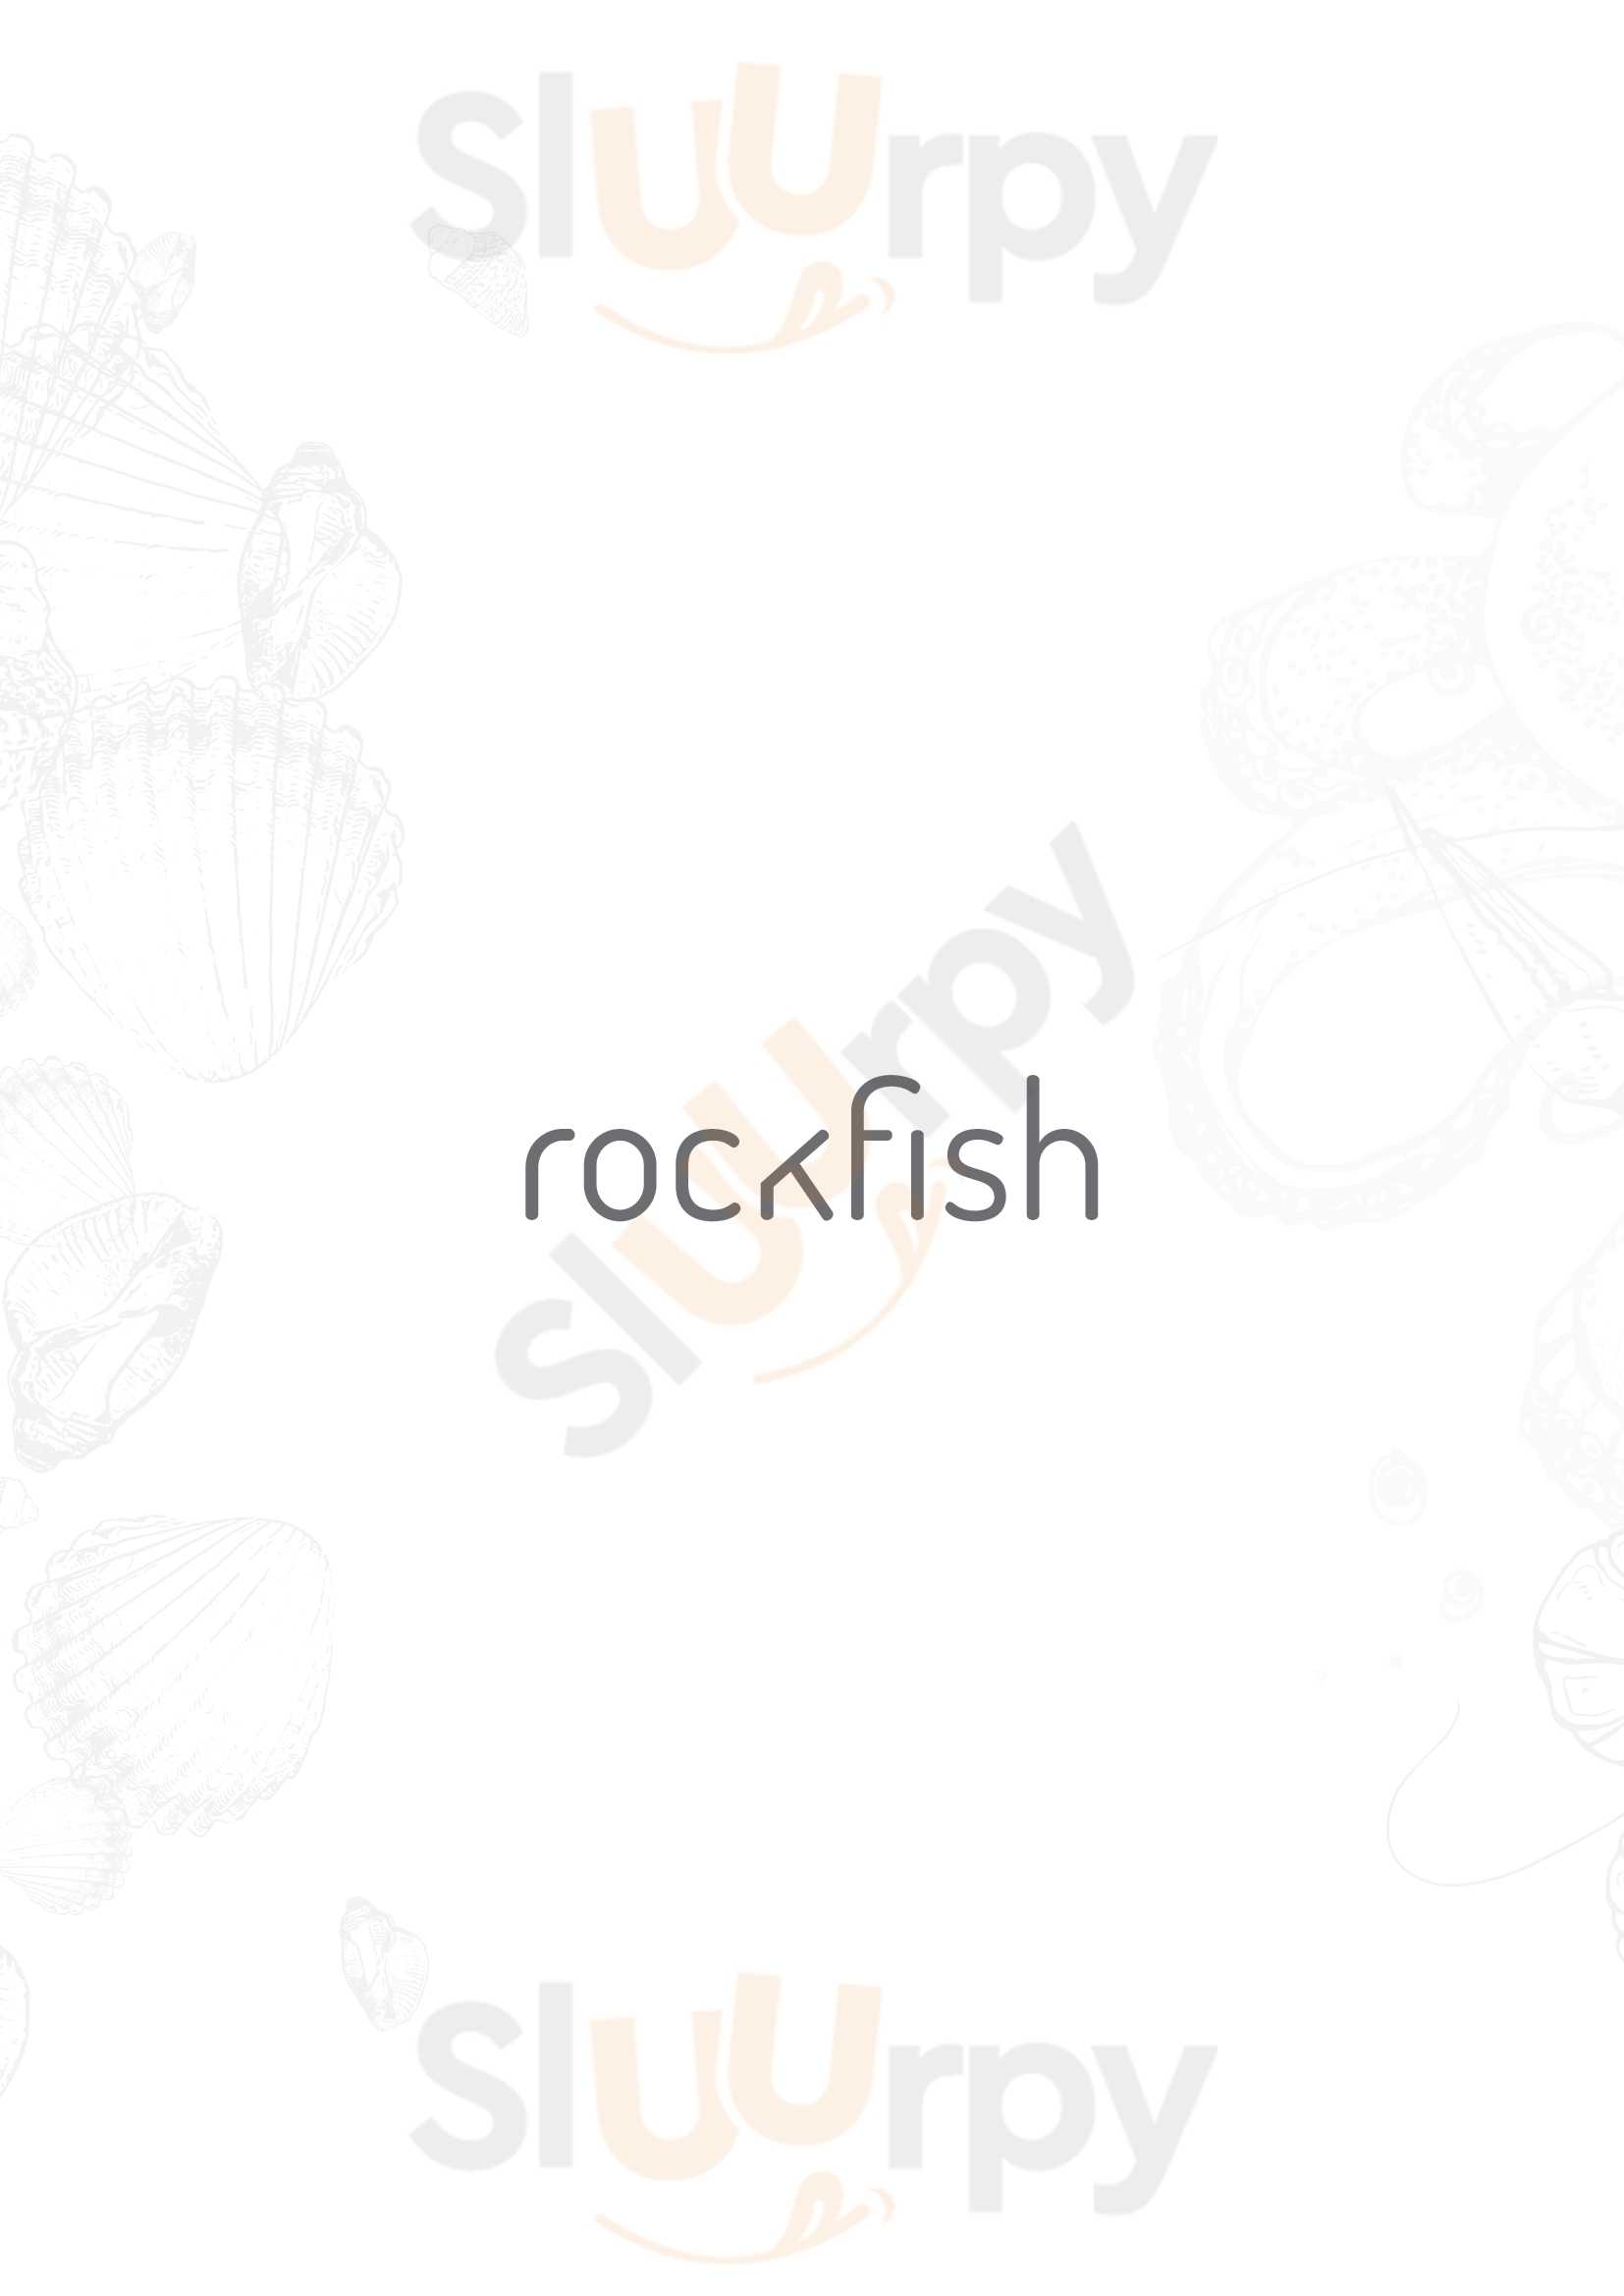 ‪rockfish‬ دُبي Menu - 1